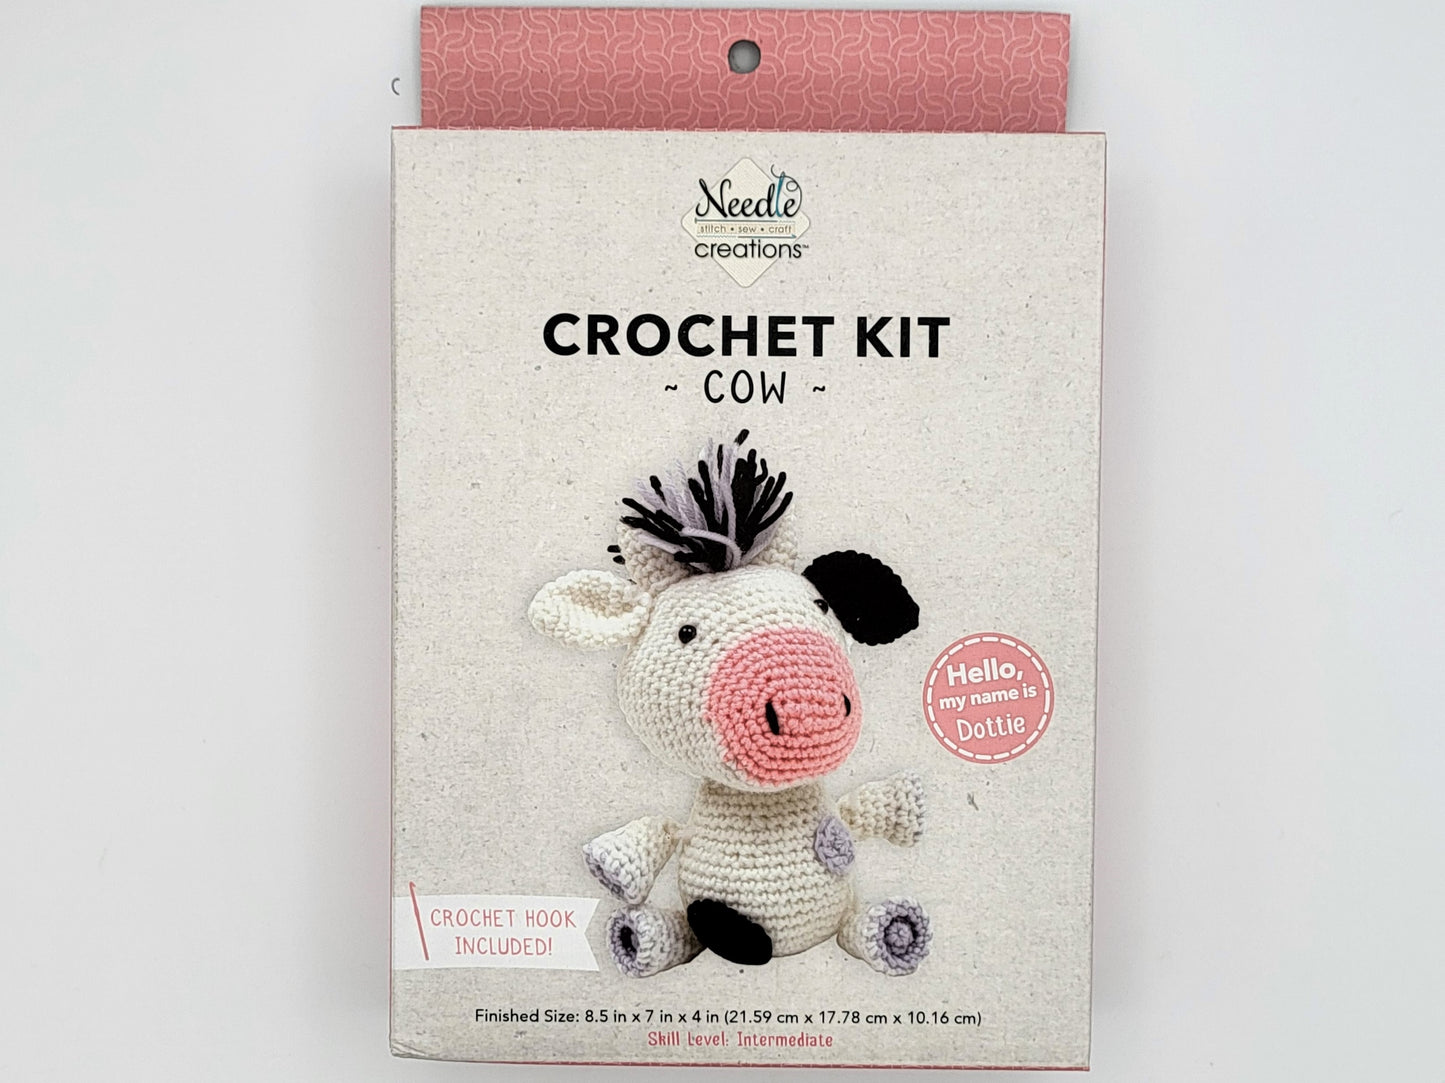 Crochet Kit - Cow - Fabric Editions Needle Creations